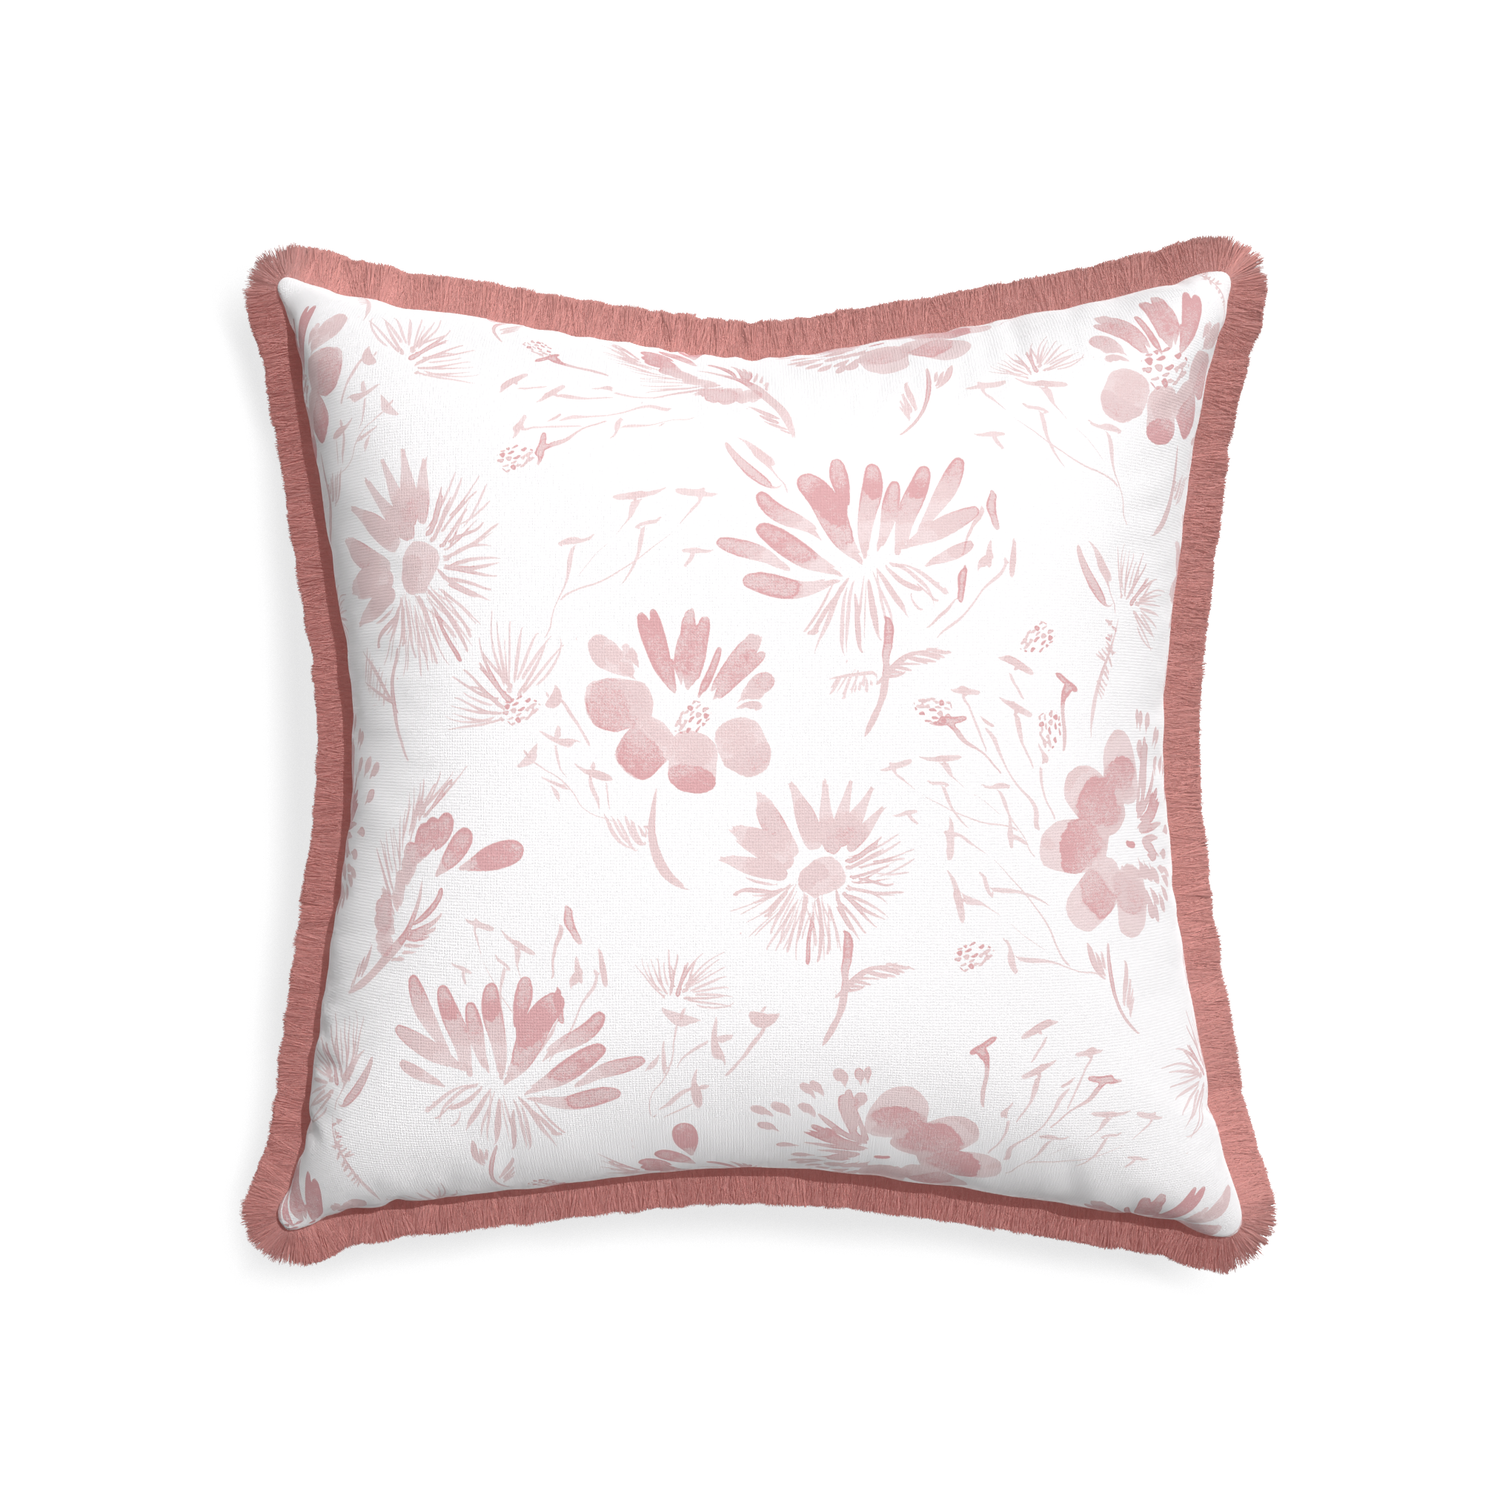 22-square blake custom pillow with d fringe on white background